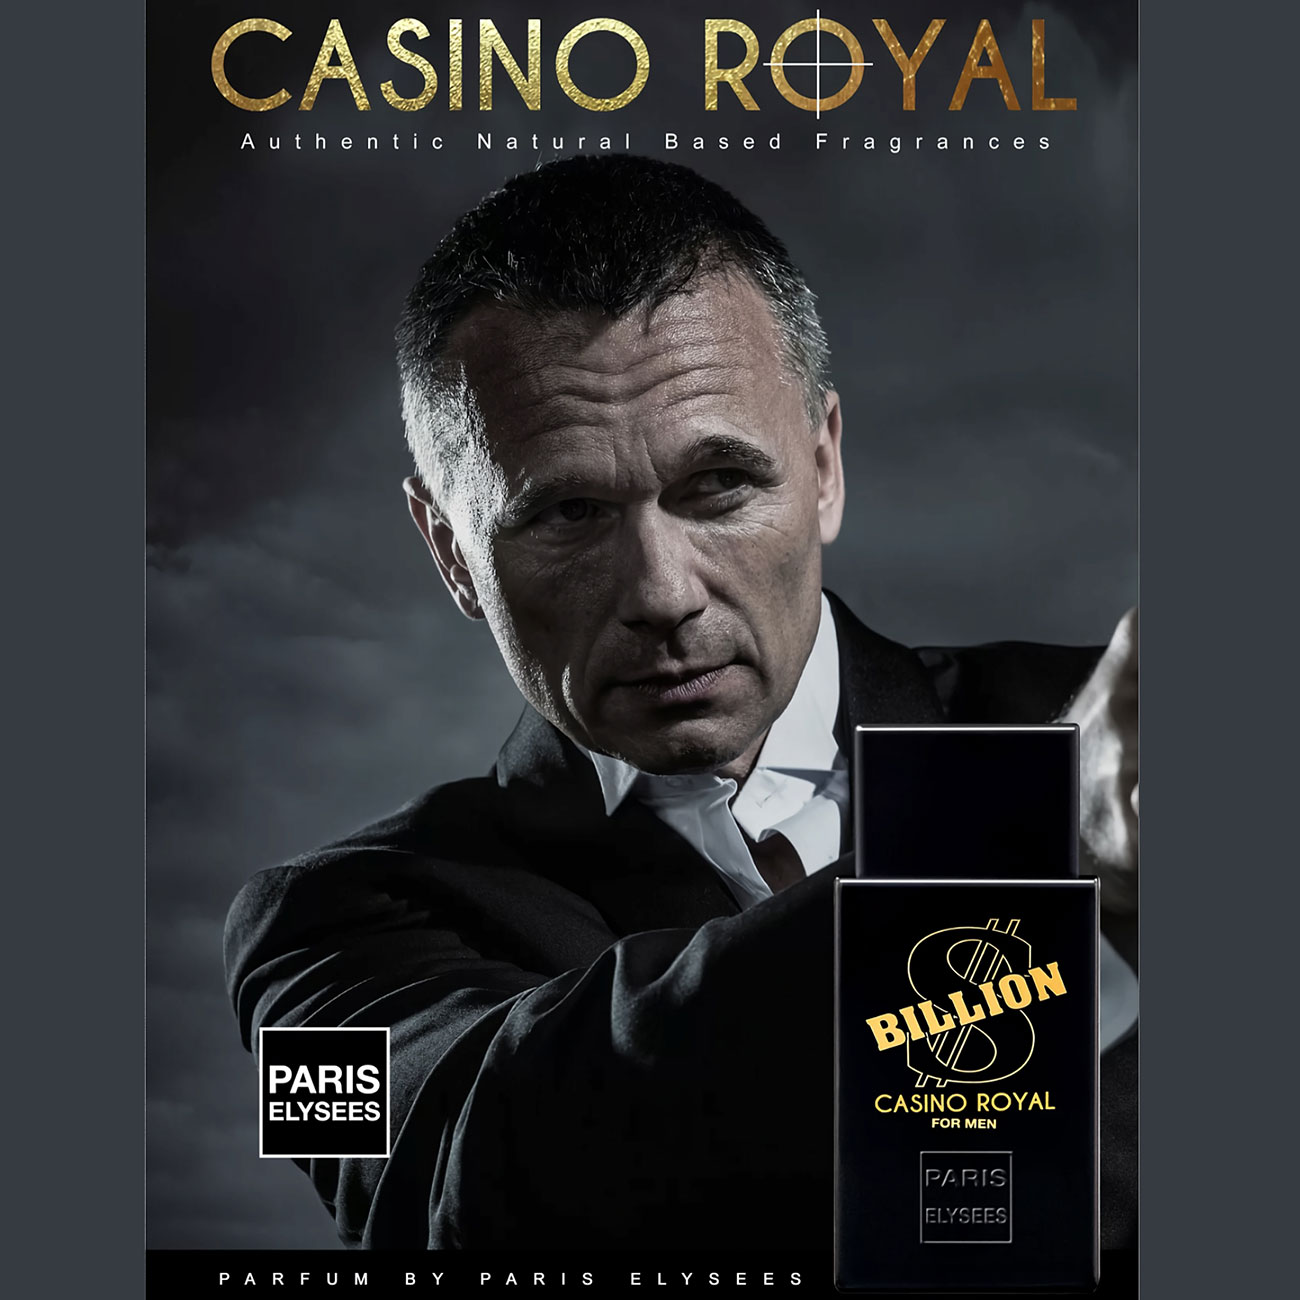 Perfume Billion Dollar Casino Royal Paris Elysees Eau de Toilette Masculino 100 ml